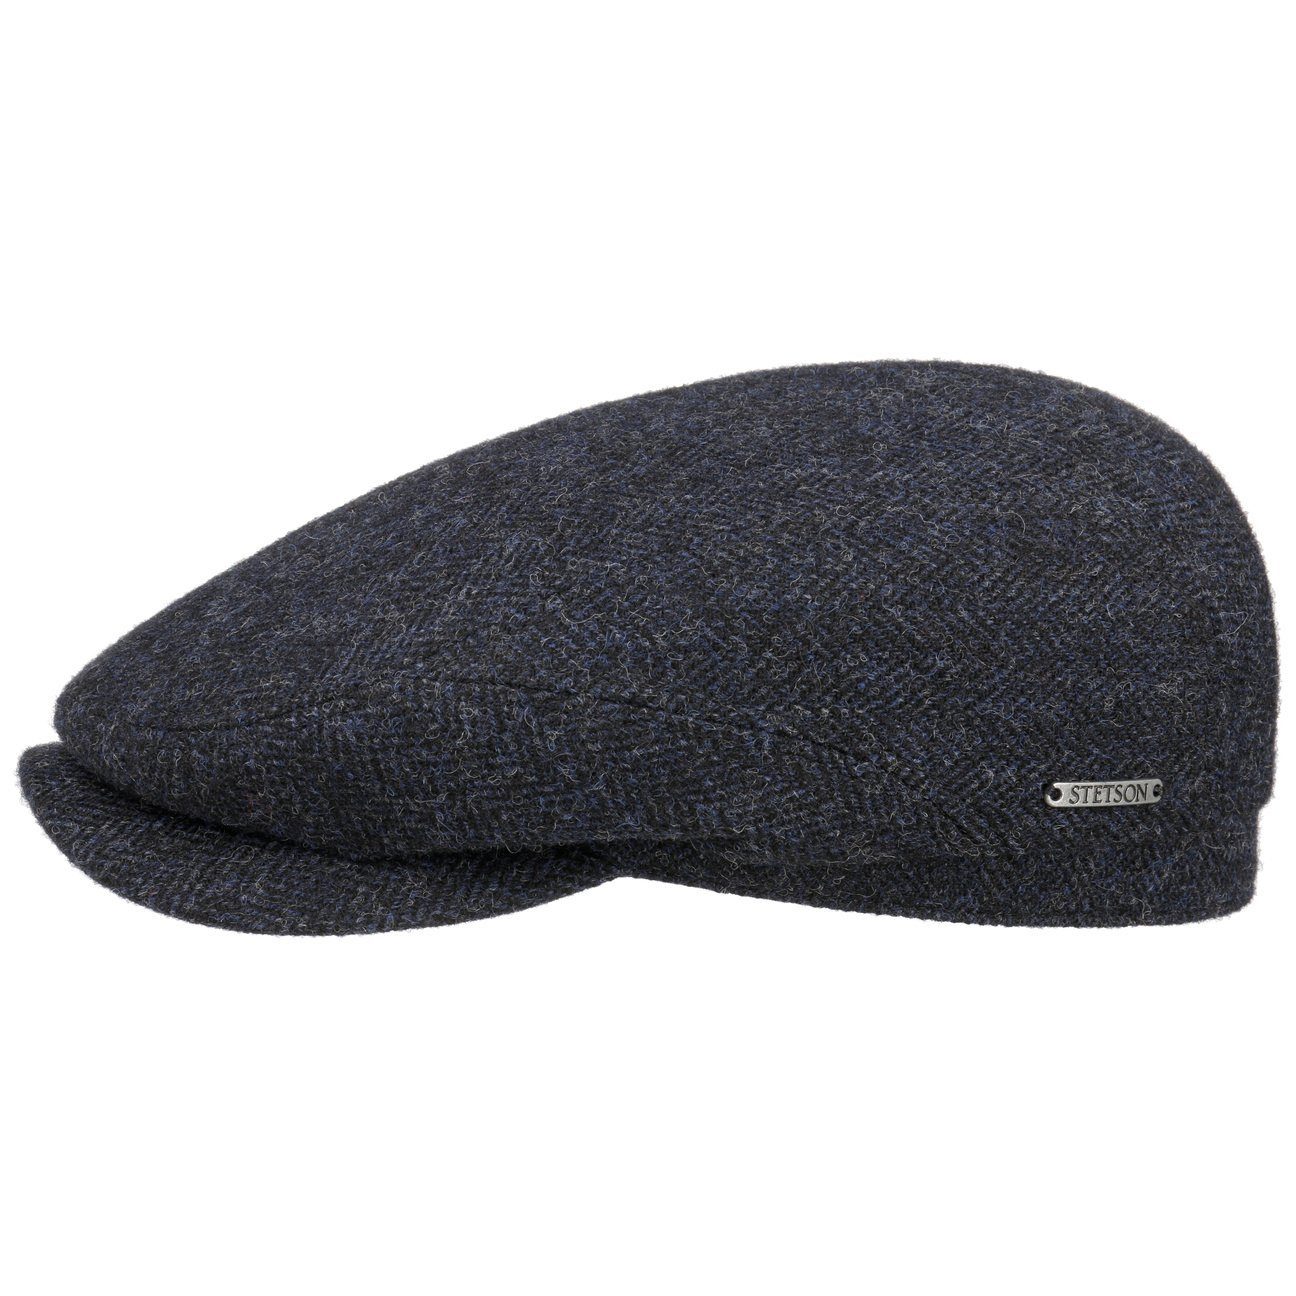 Stetson Flat Cap (1-St) Flatcap mit Schirm, Made in the EU schwarz-blau